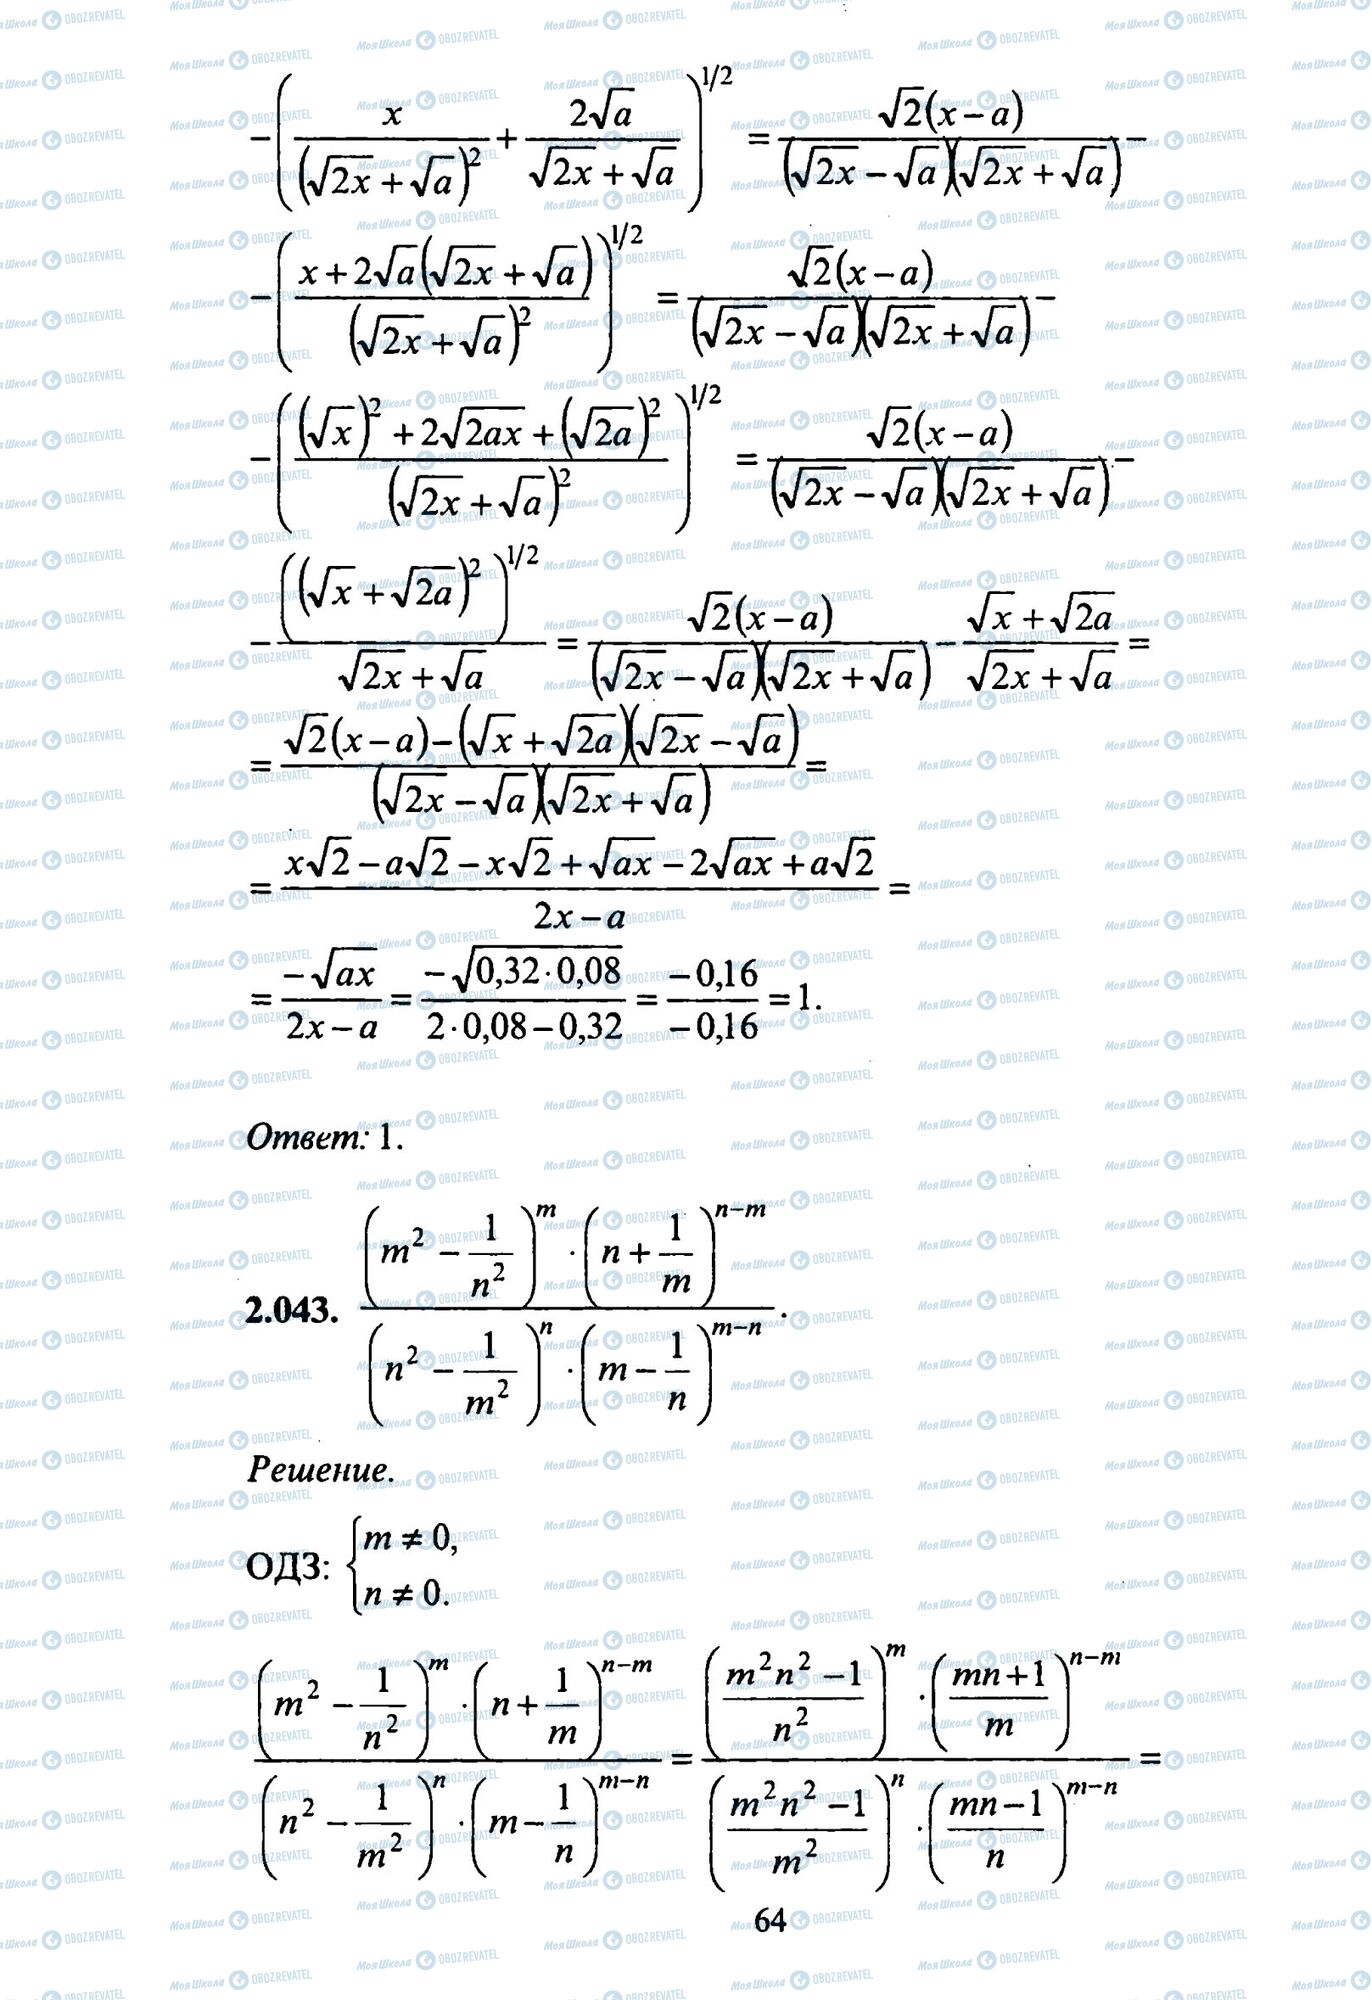 ЗНО Математика 11 класс страница 43